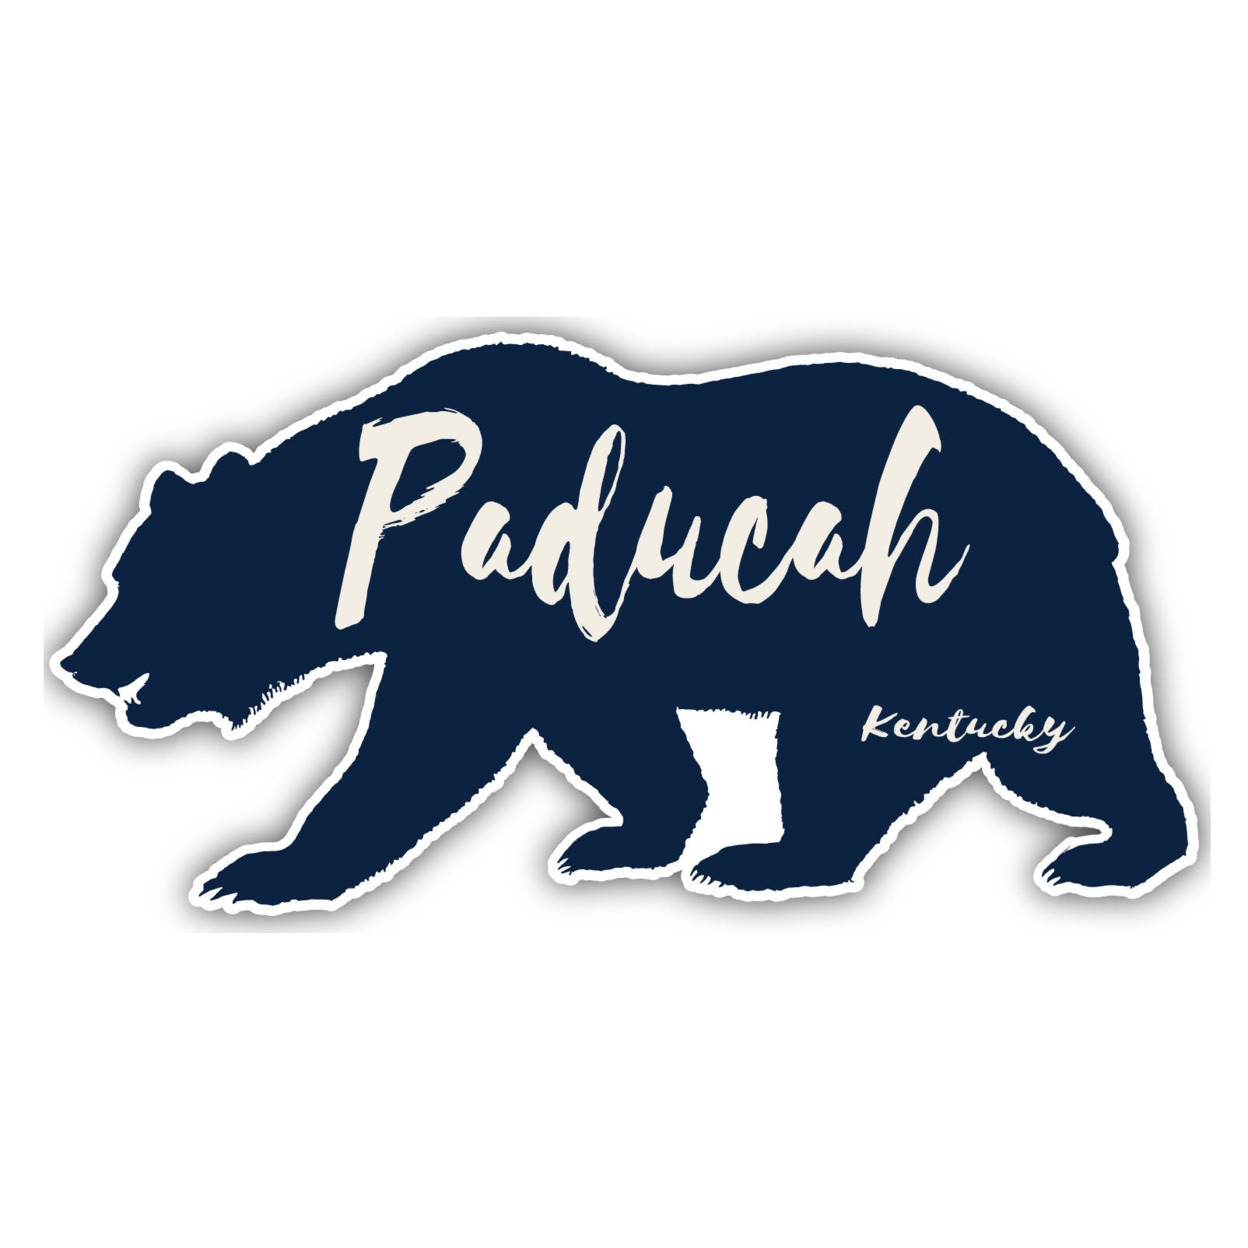 Paducah Kentucky Souvenir Decorative Stickers (Choose Theme And Size) - Single Unit, 2-Inch, Adventures Awaits